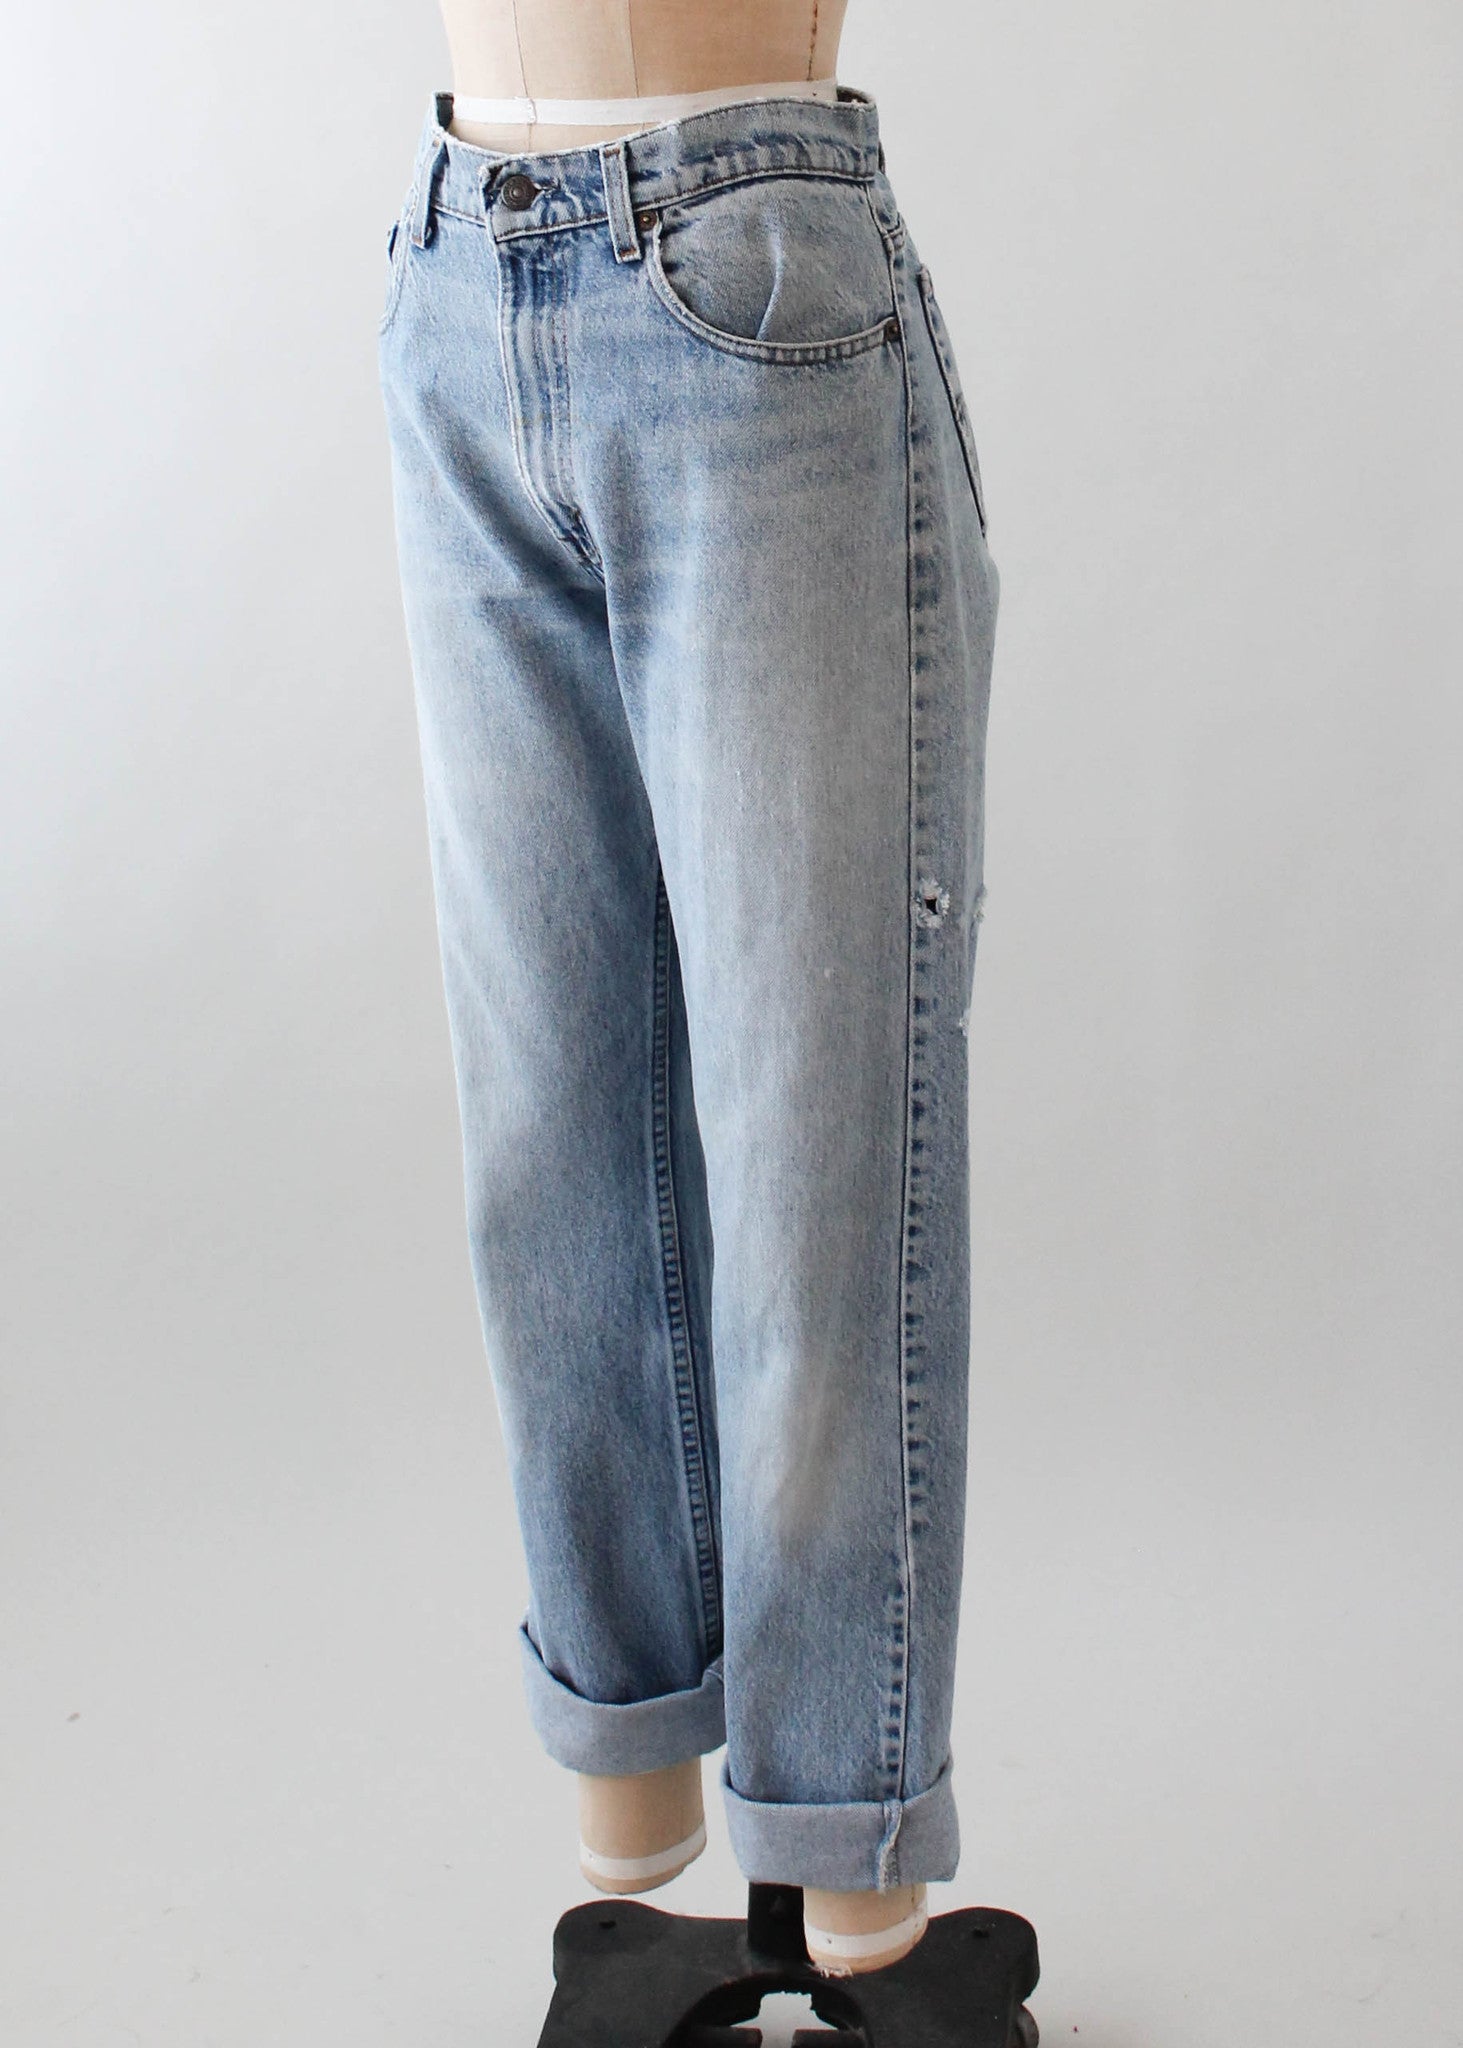 Vintage 1980s Distressed Levi's Jeans - Raleigh Vintage